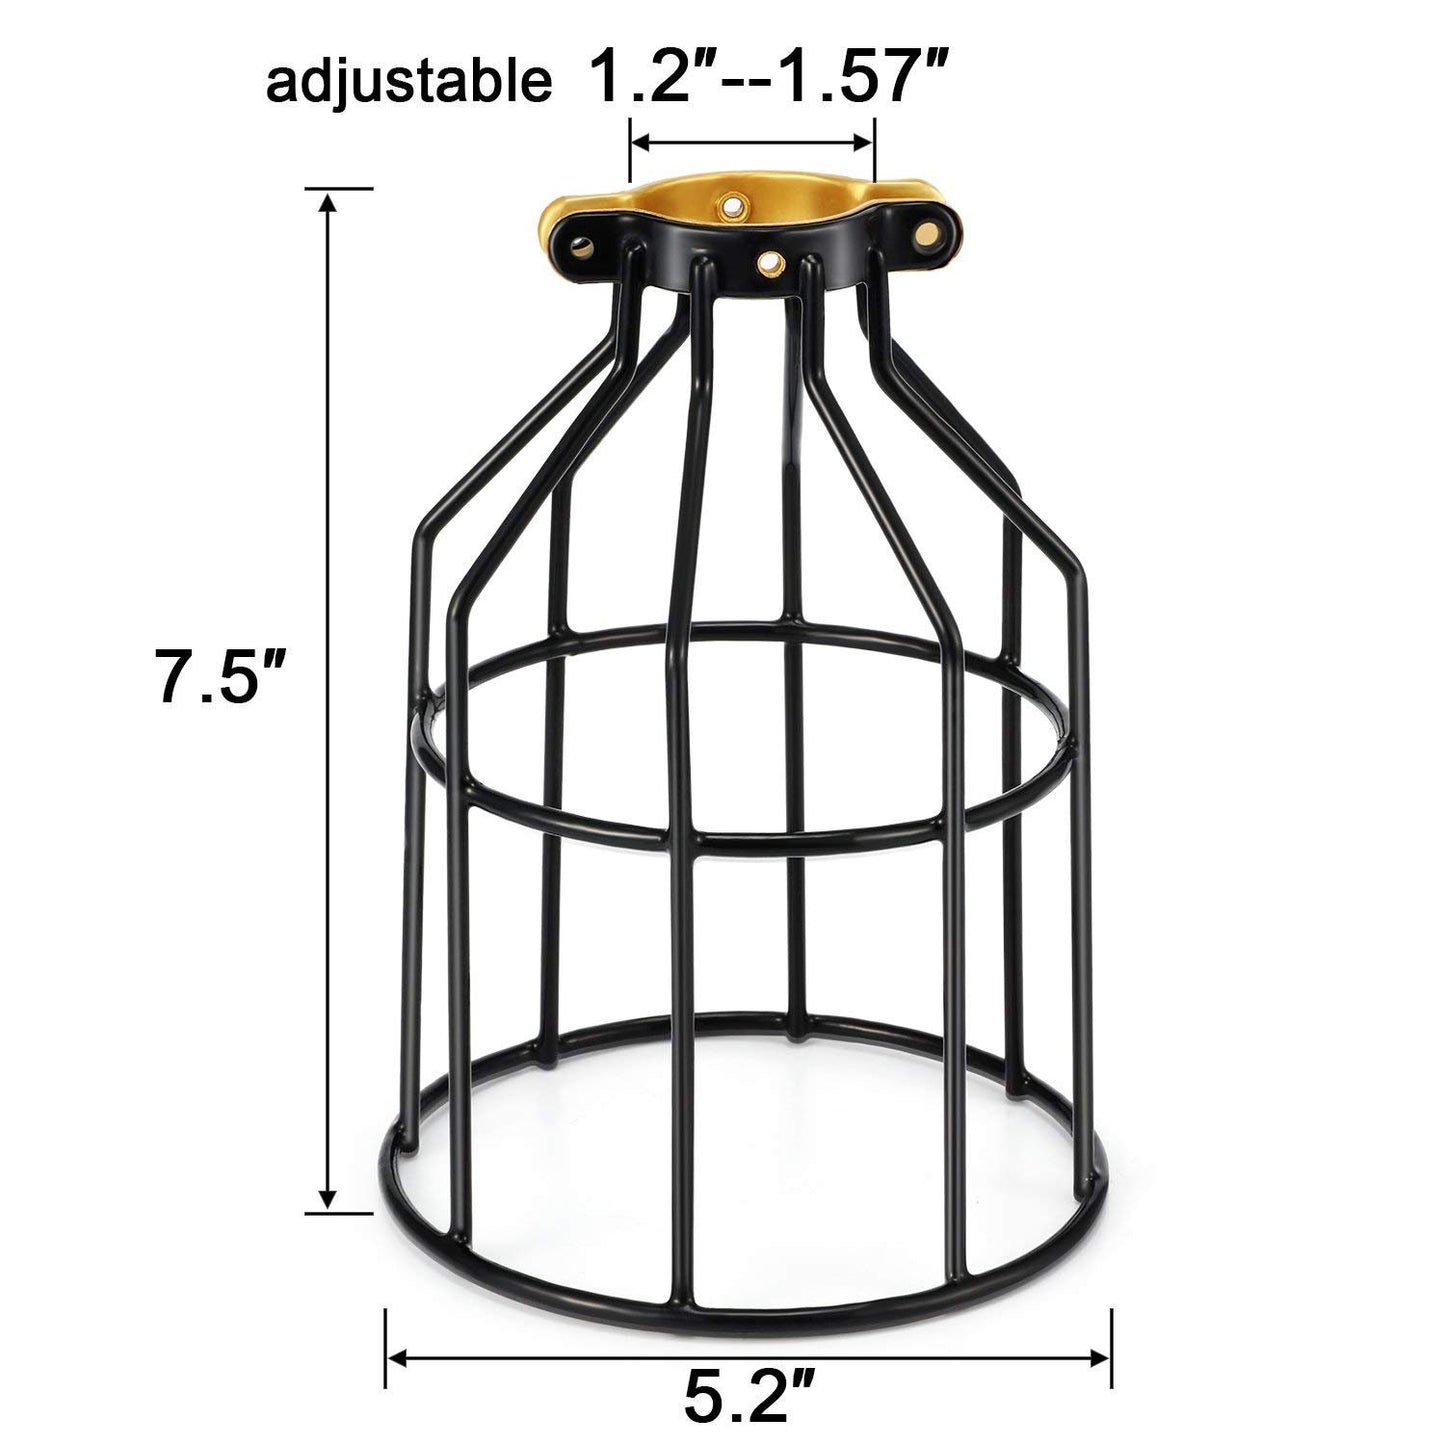 Adjustable Industrial Vintage Style Metal Lamp Guard Shade Cage